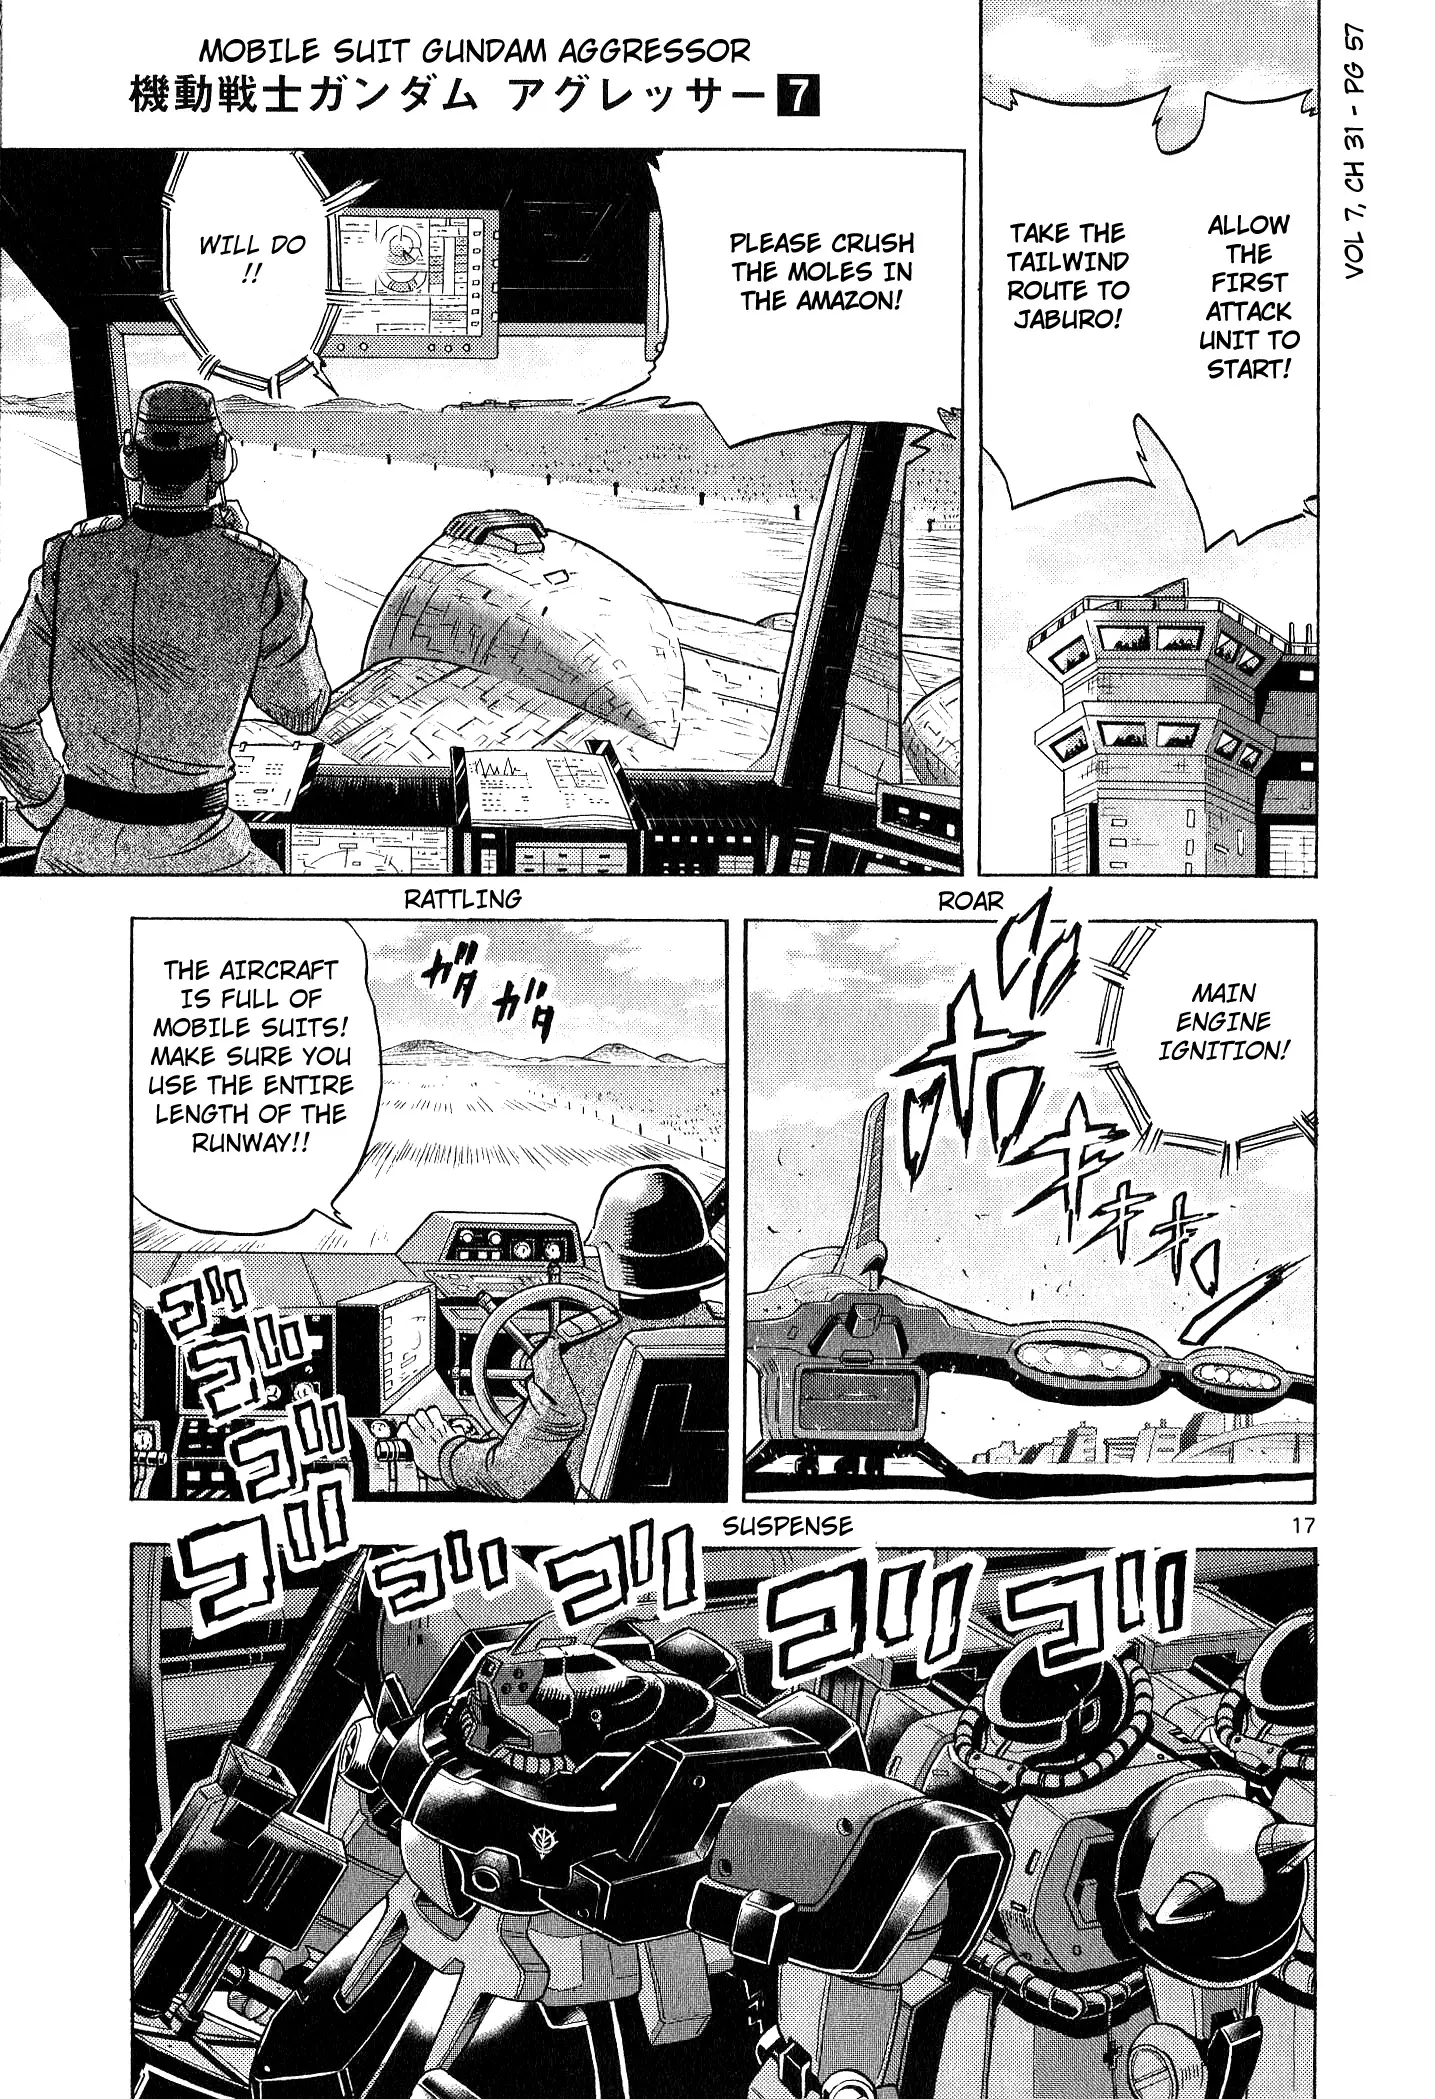 Mobile Suit Gundam Aggressor - 31 page 16-91e0bdc4